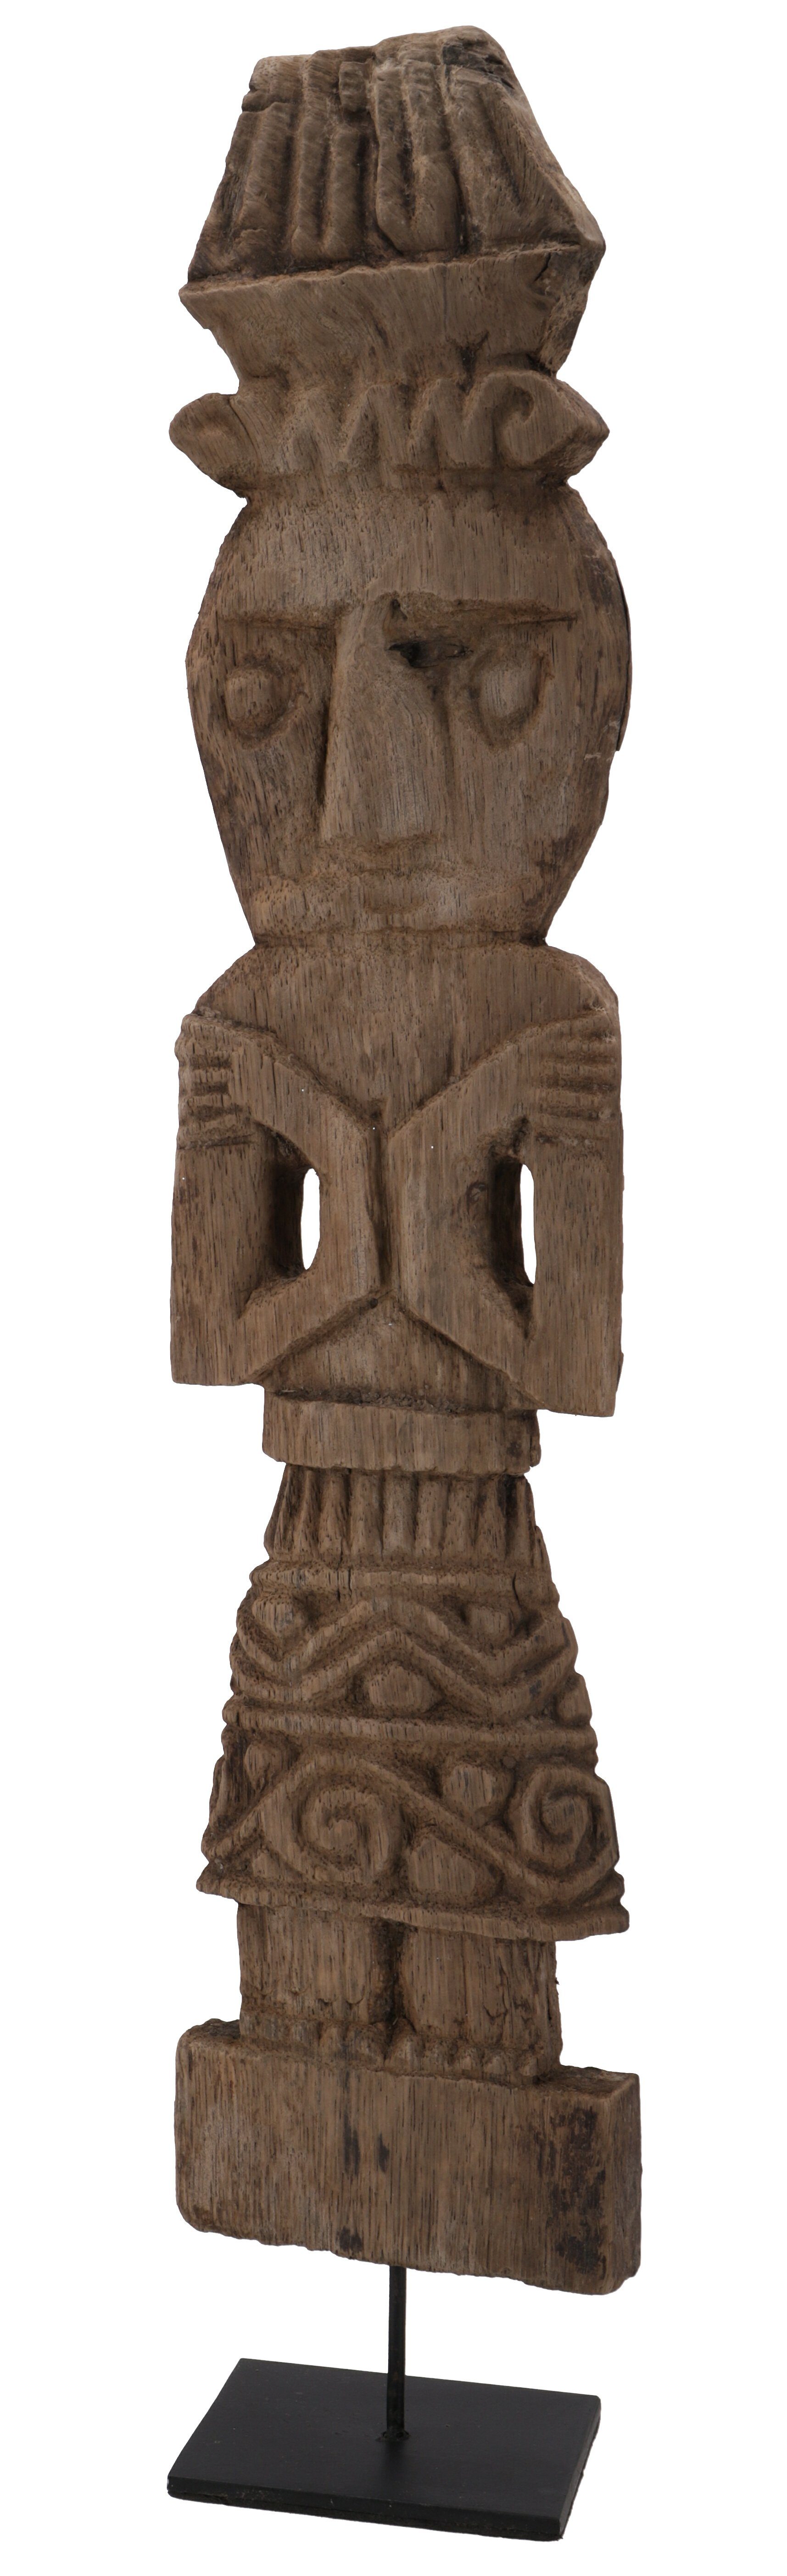 Guru-Shop Dekofigur Holzfigur, Skulptur, Schnitzerei im primitiv